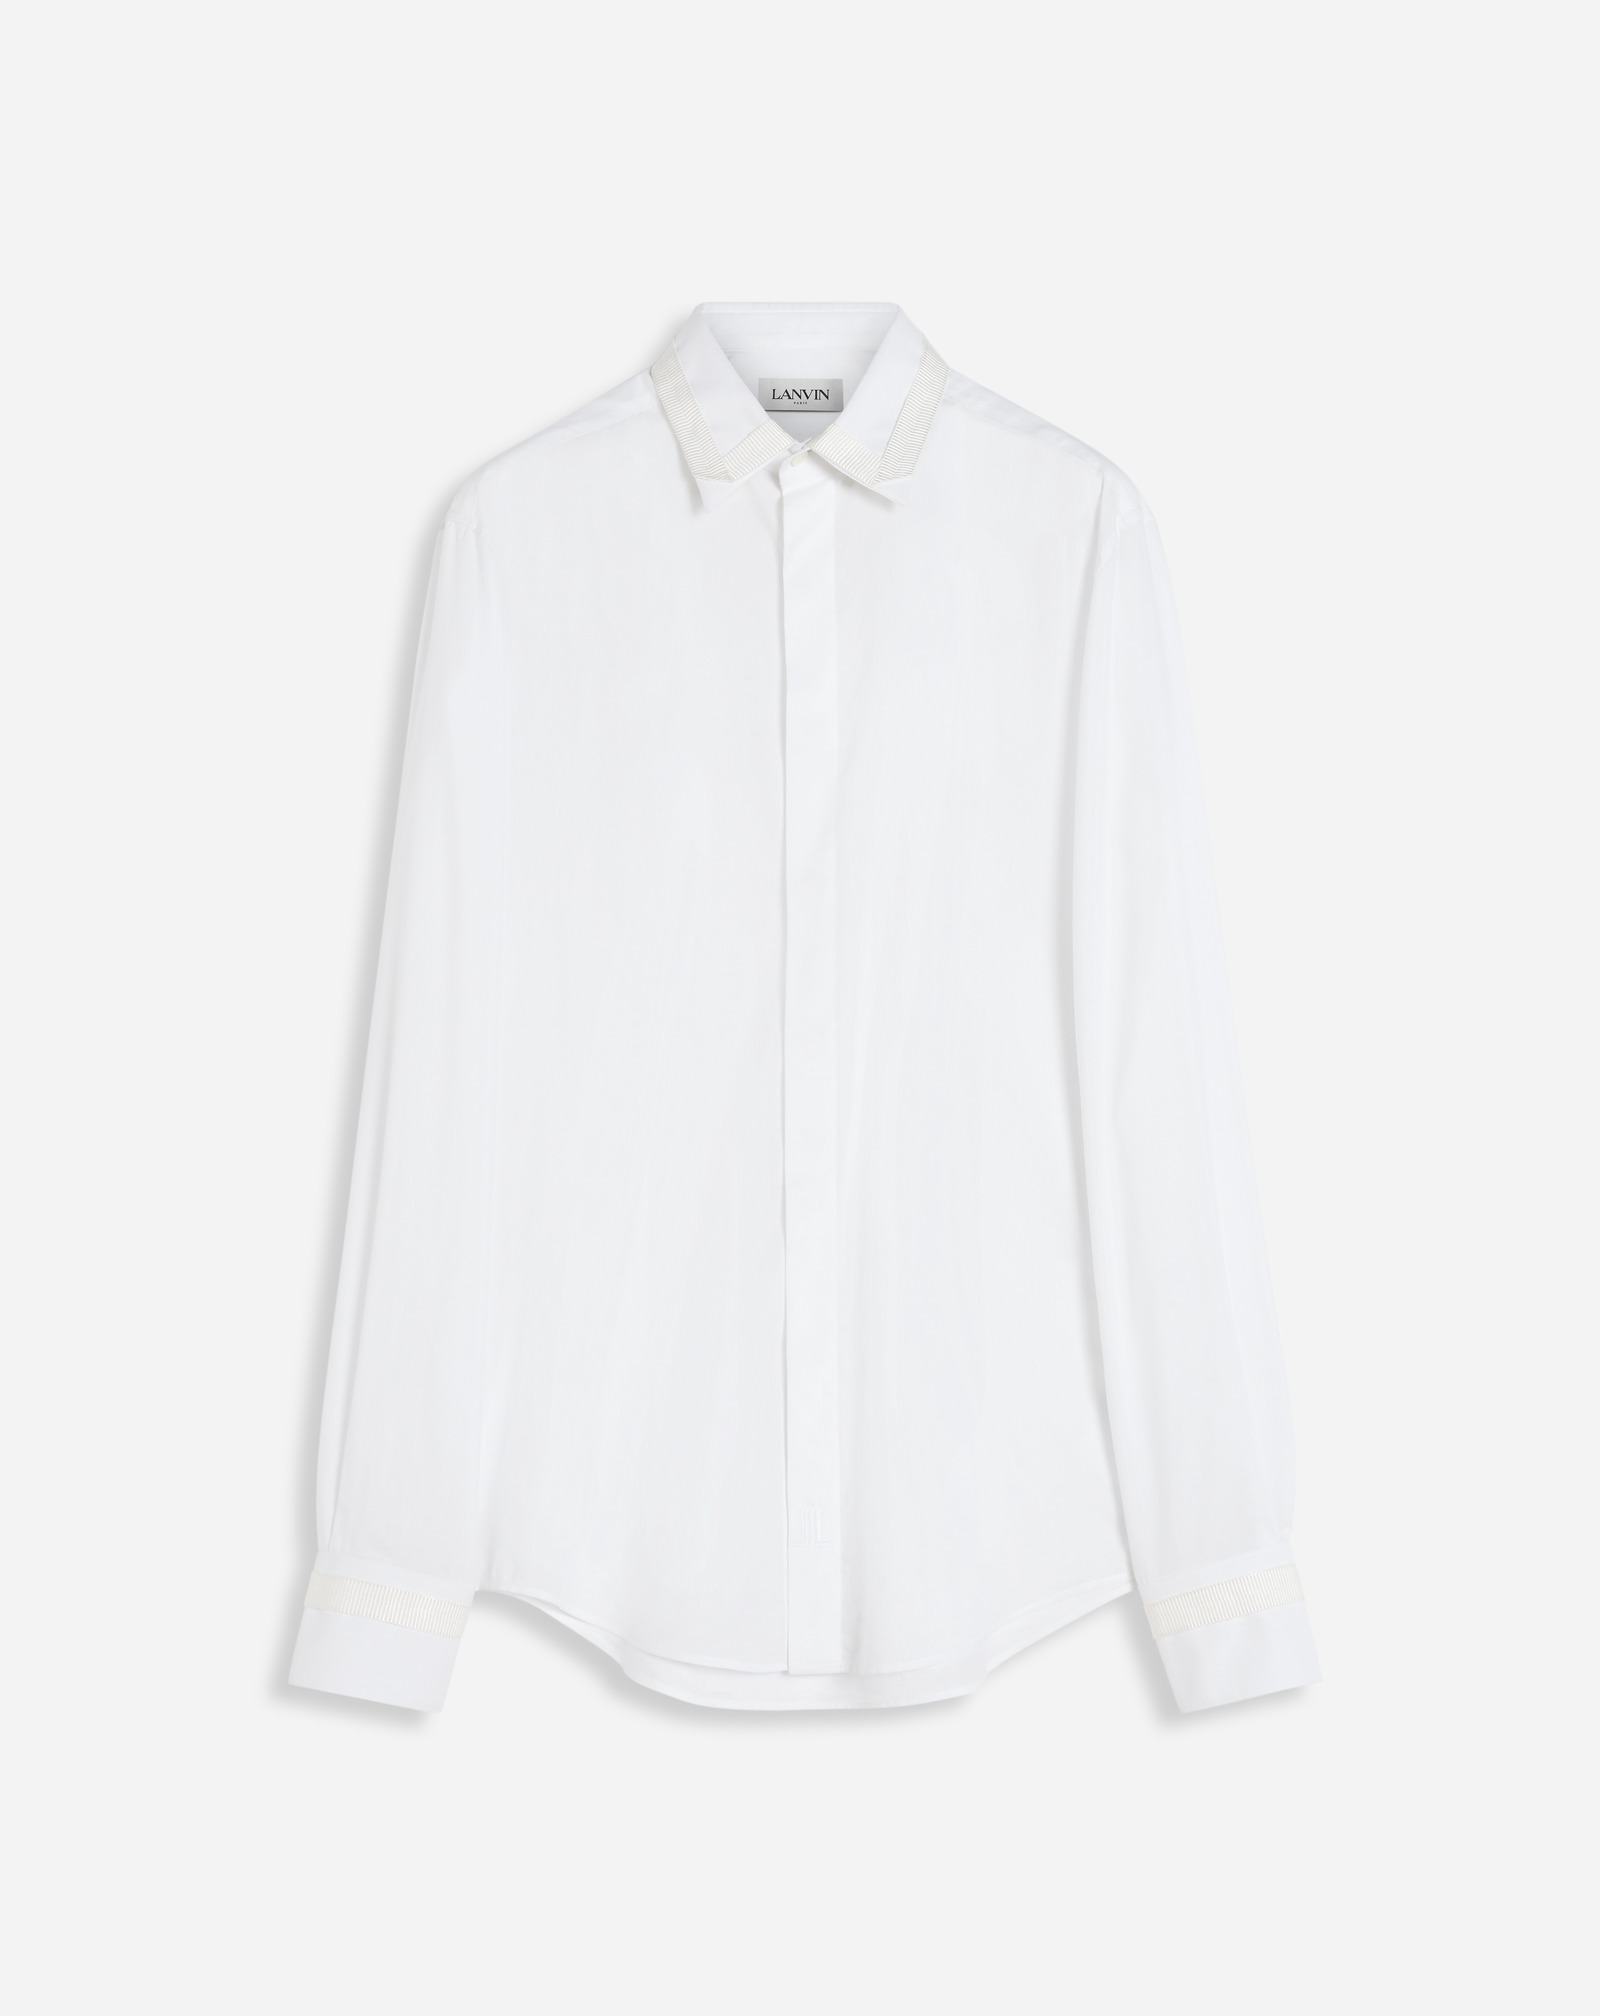 Lanvin Shirt With Grosgrain Details For Men In White